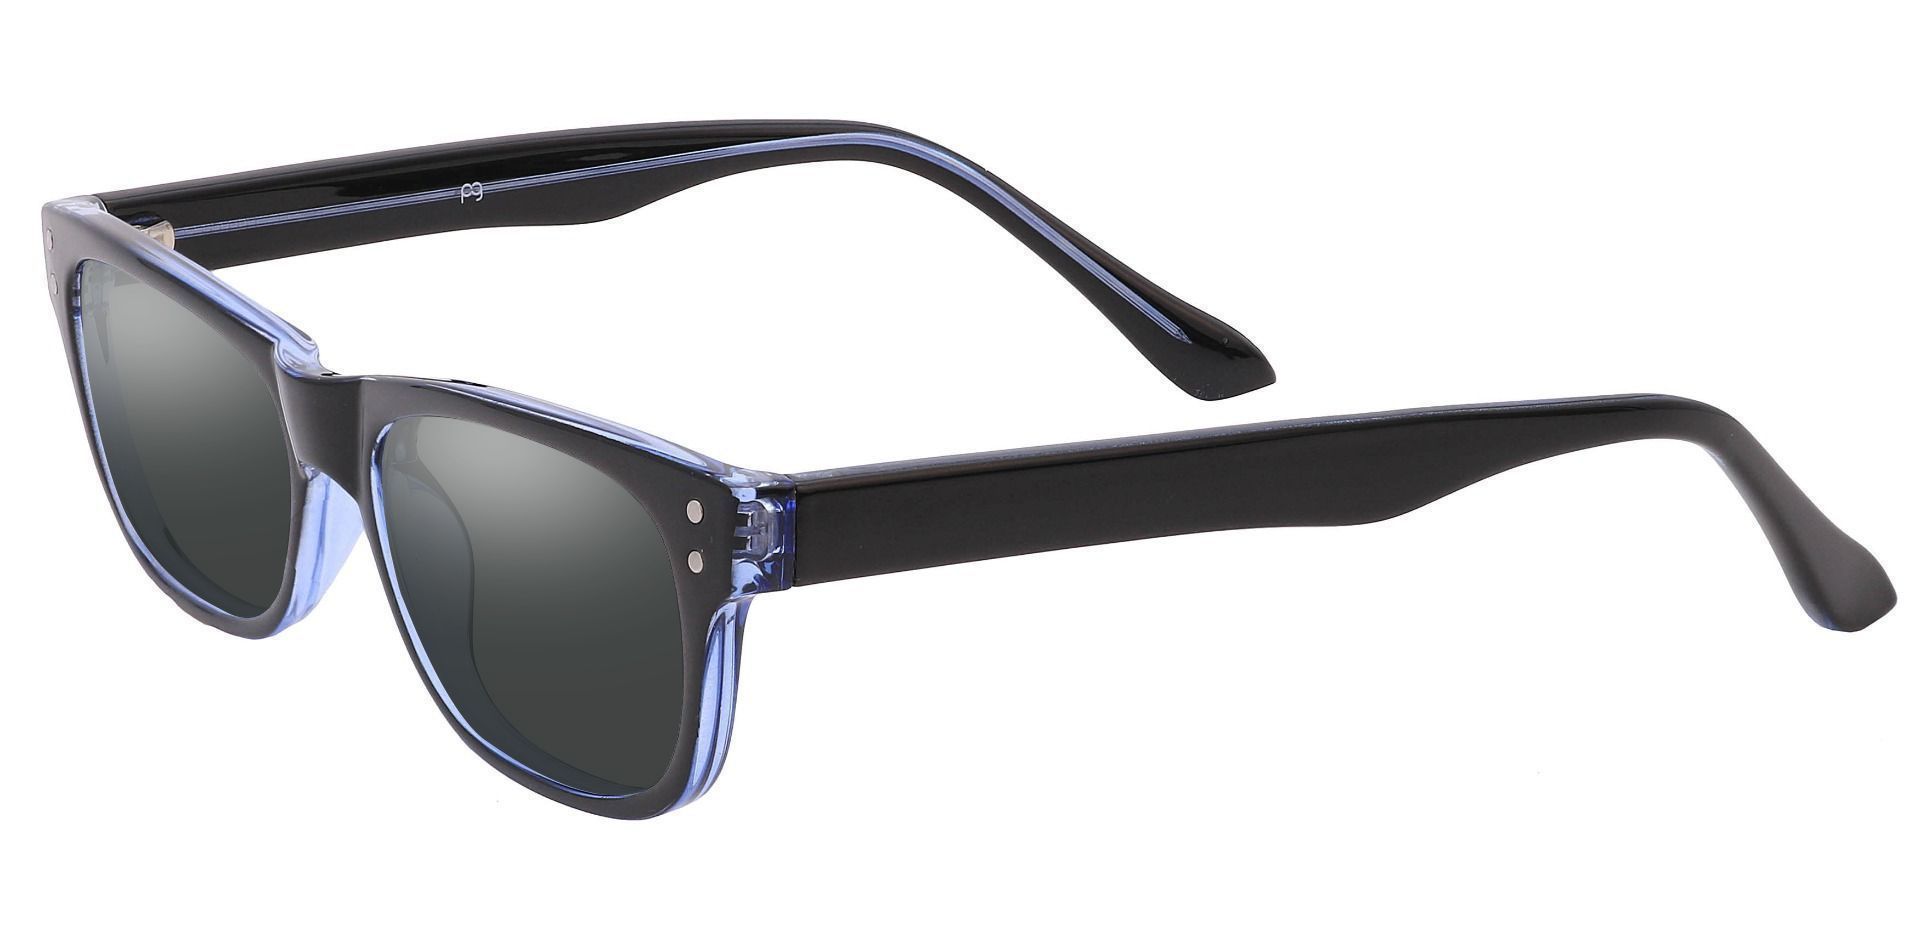 Murphy Rectangle Prescription Sunglasses - Blue Frame With Gray Lenses